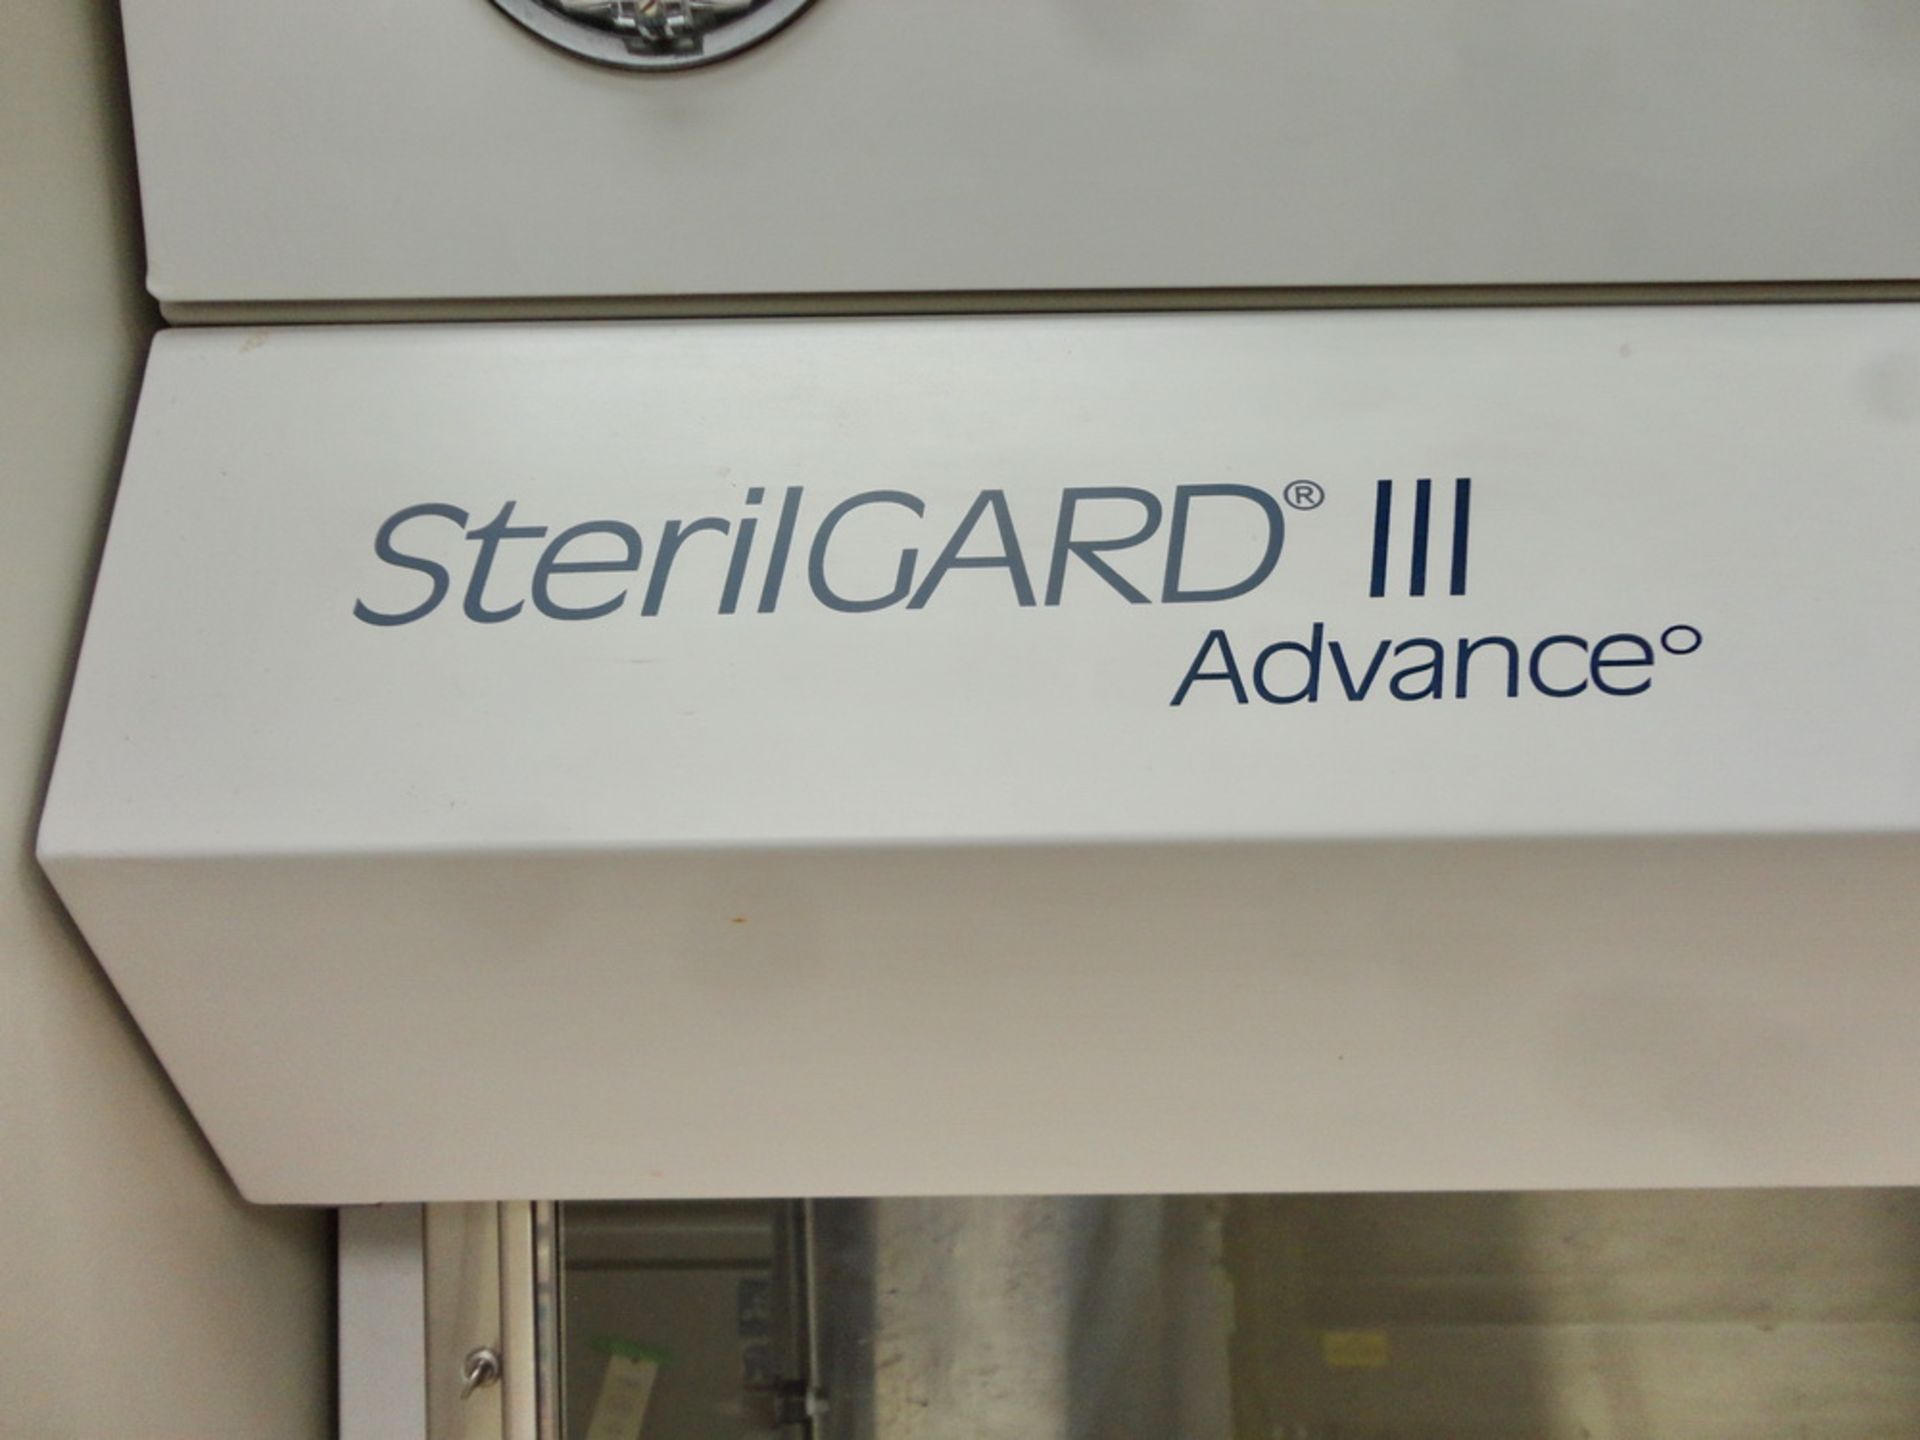 Baker SterilGard III Advance Class II Biological Safety Cabinet, Model SG603, S/N 75802 - Image 2 of 3